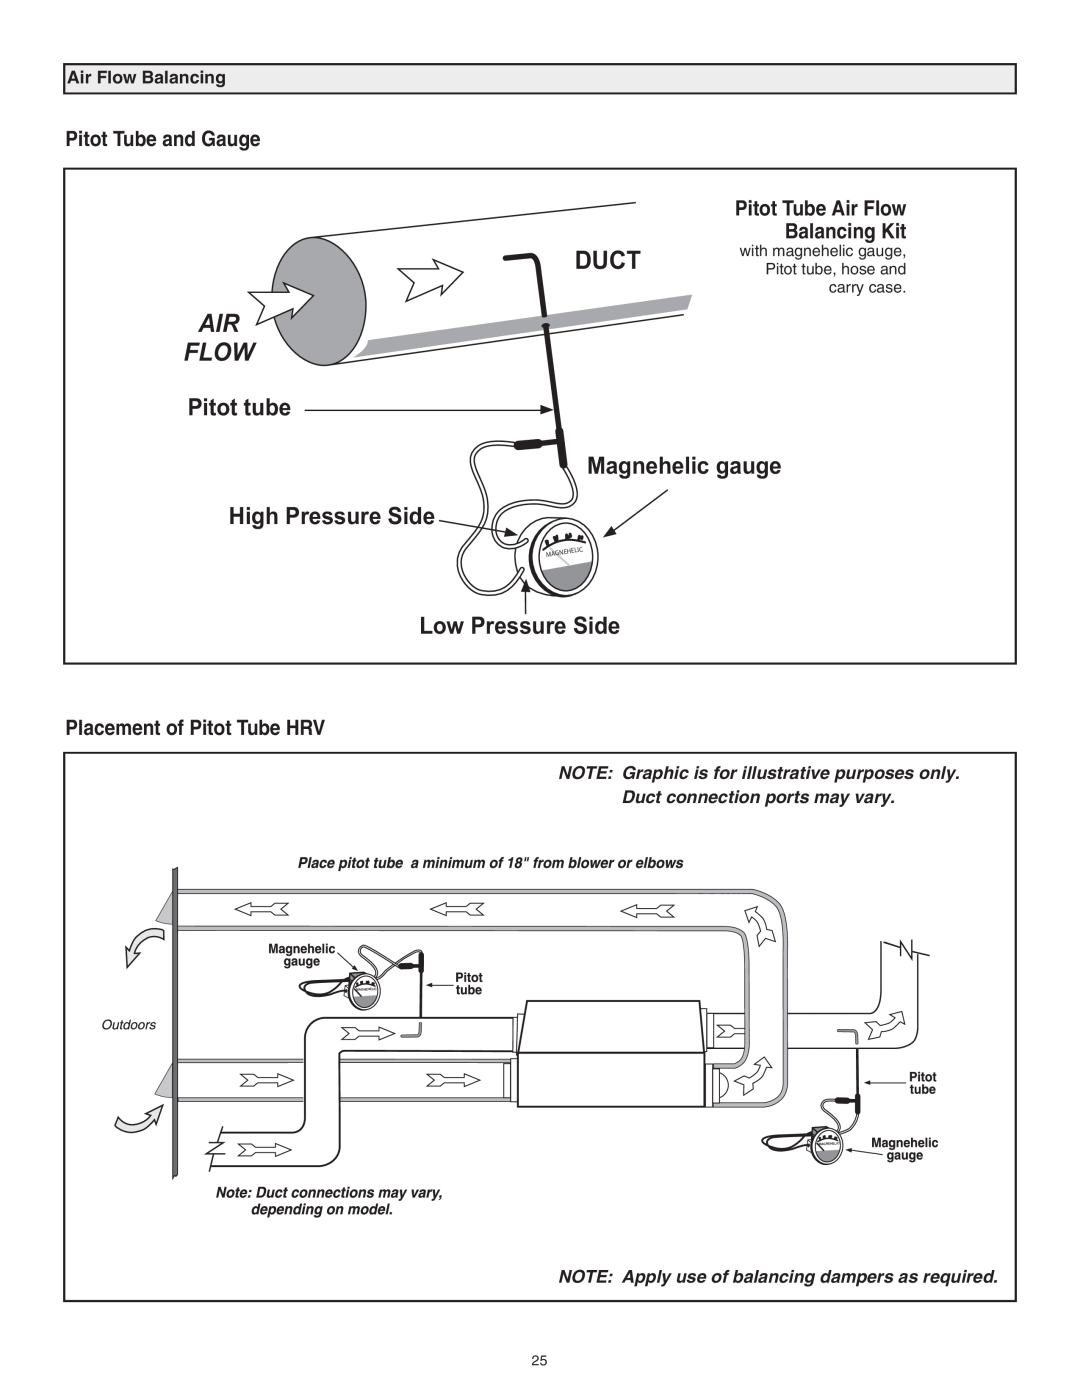 Lifebreath 120ERV Duct, Pitot tube Magnehelic gauge High Pressure Side, Low Pressure Side, Pitot Tube and Gauge, Flow 